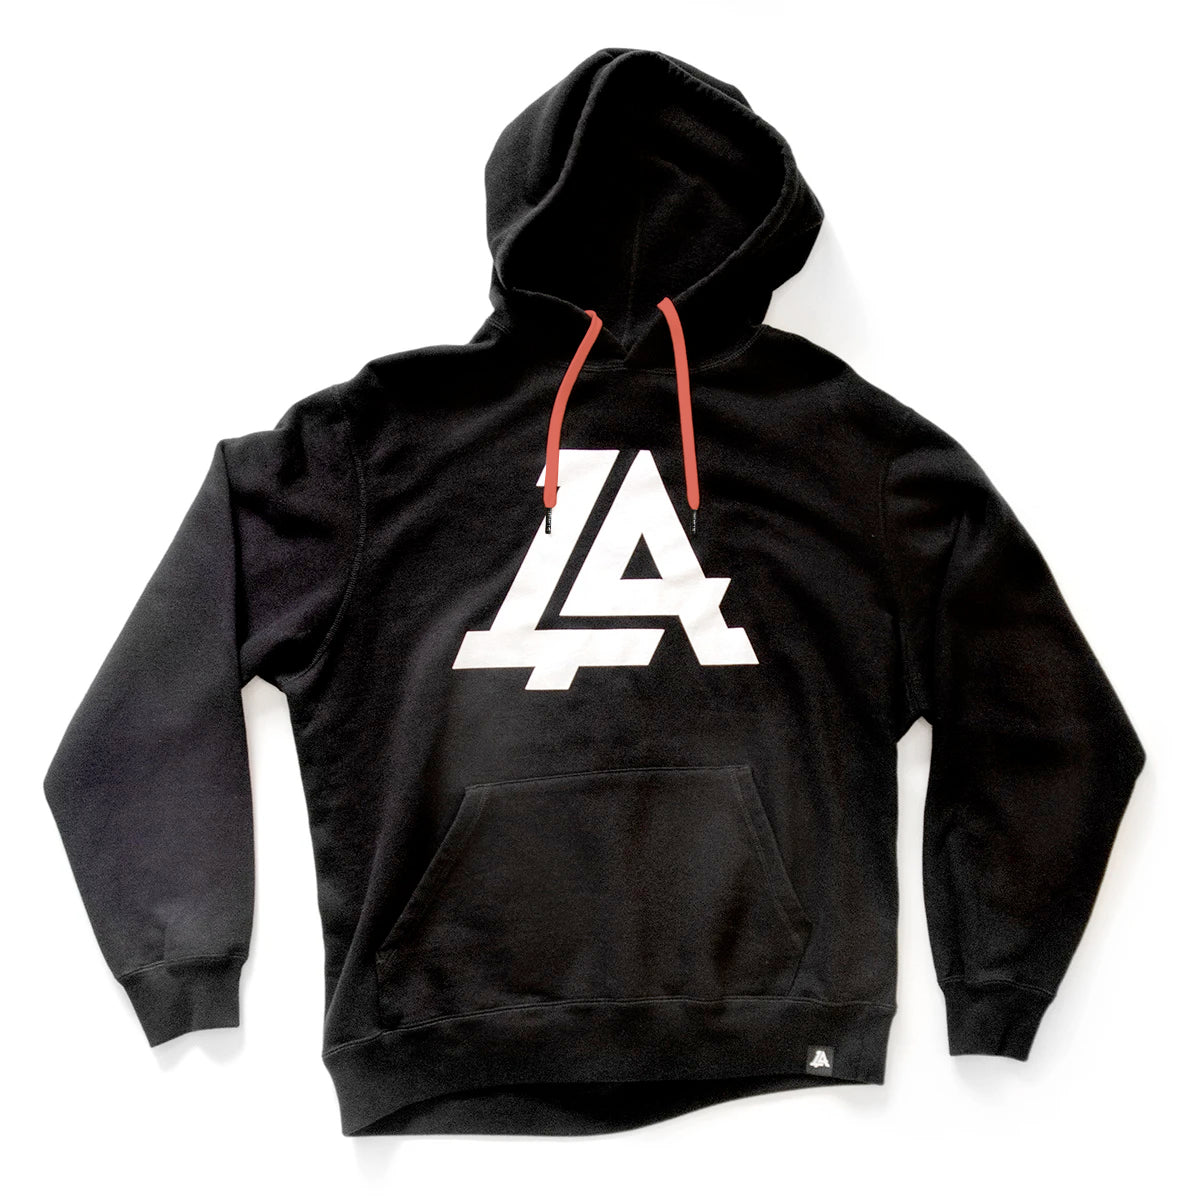 Lost Art Canada - black icon hoodie sweatshirt front view coral strings